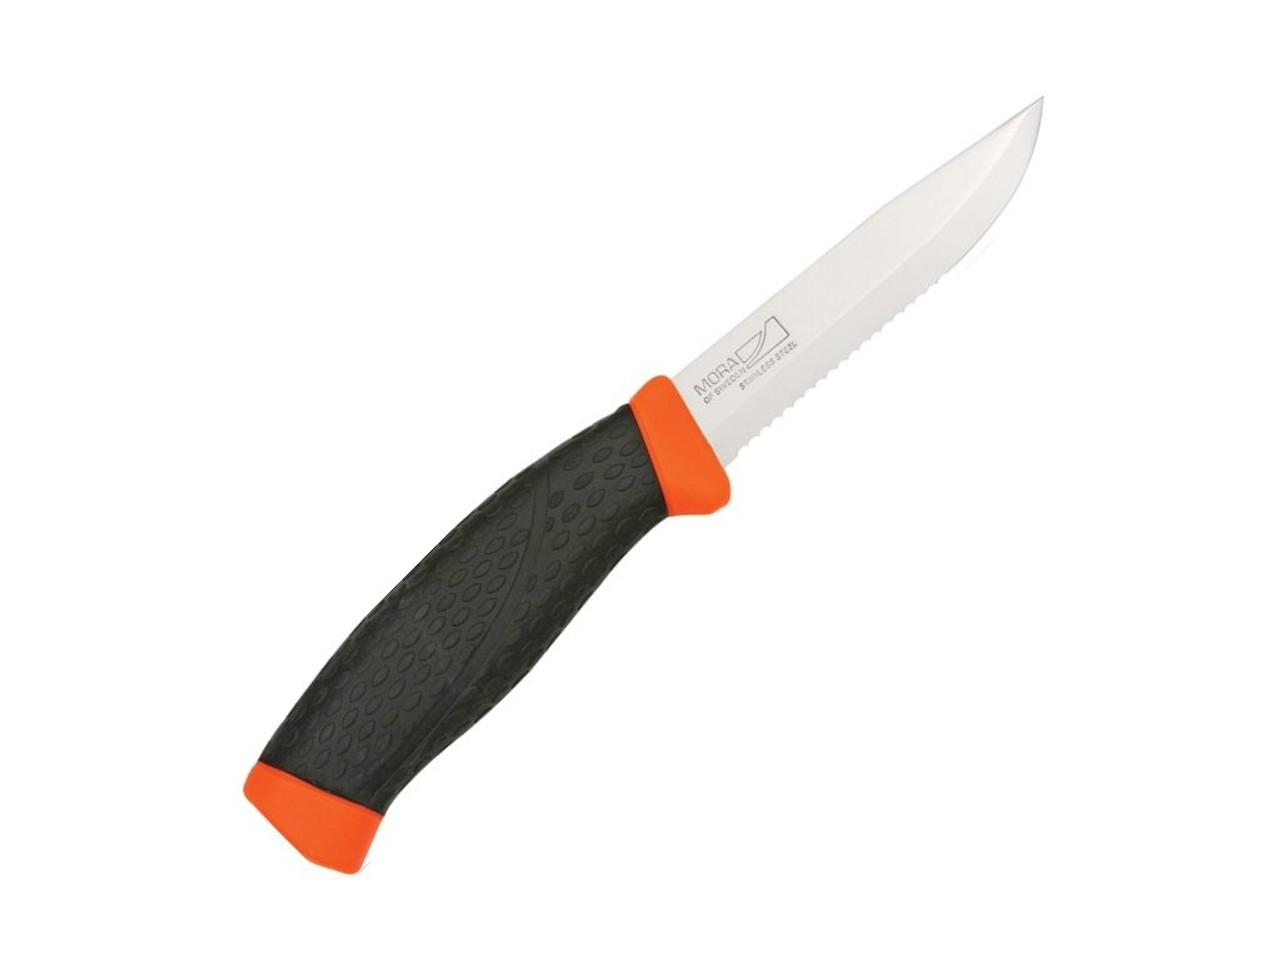 Morakniv Craftline Rope Knife (11392) 4" 12C27 Satin Drop Point Partially Serrated Blade, Black And Orange Rubber Handle, Polymer Sheath